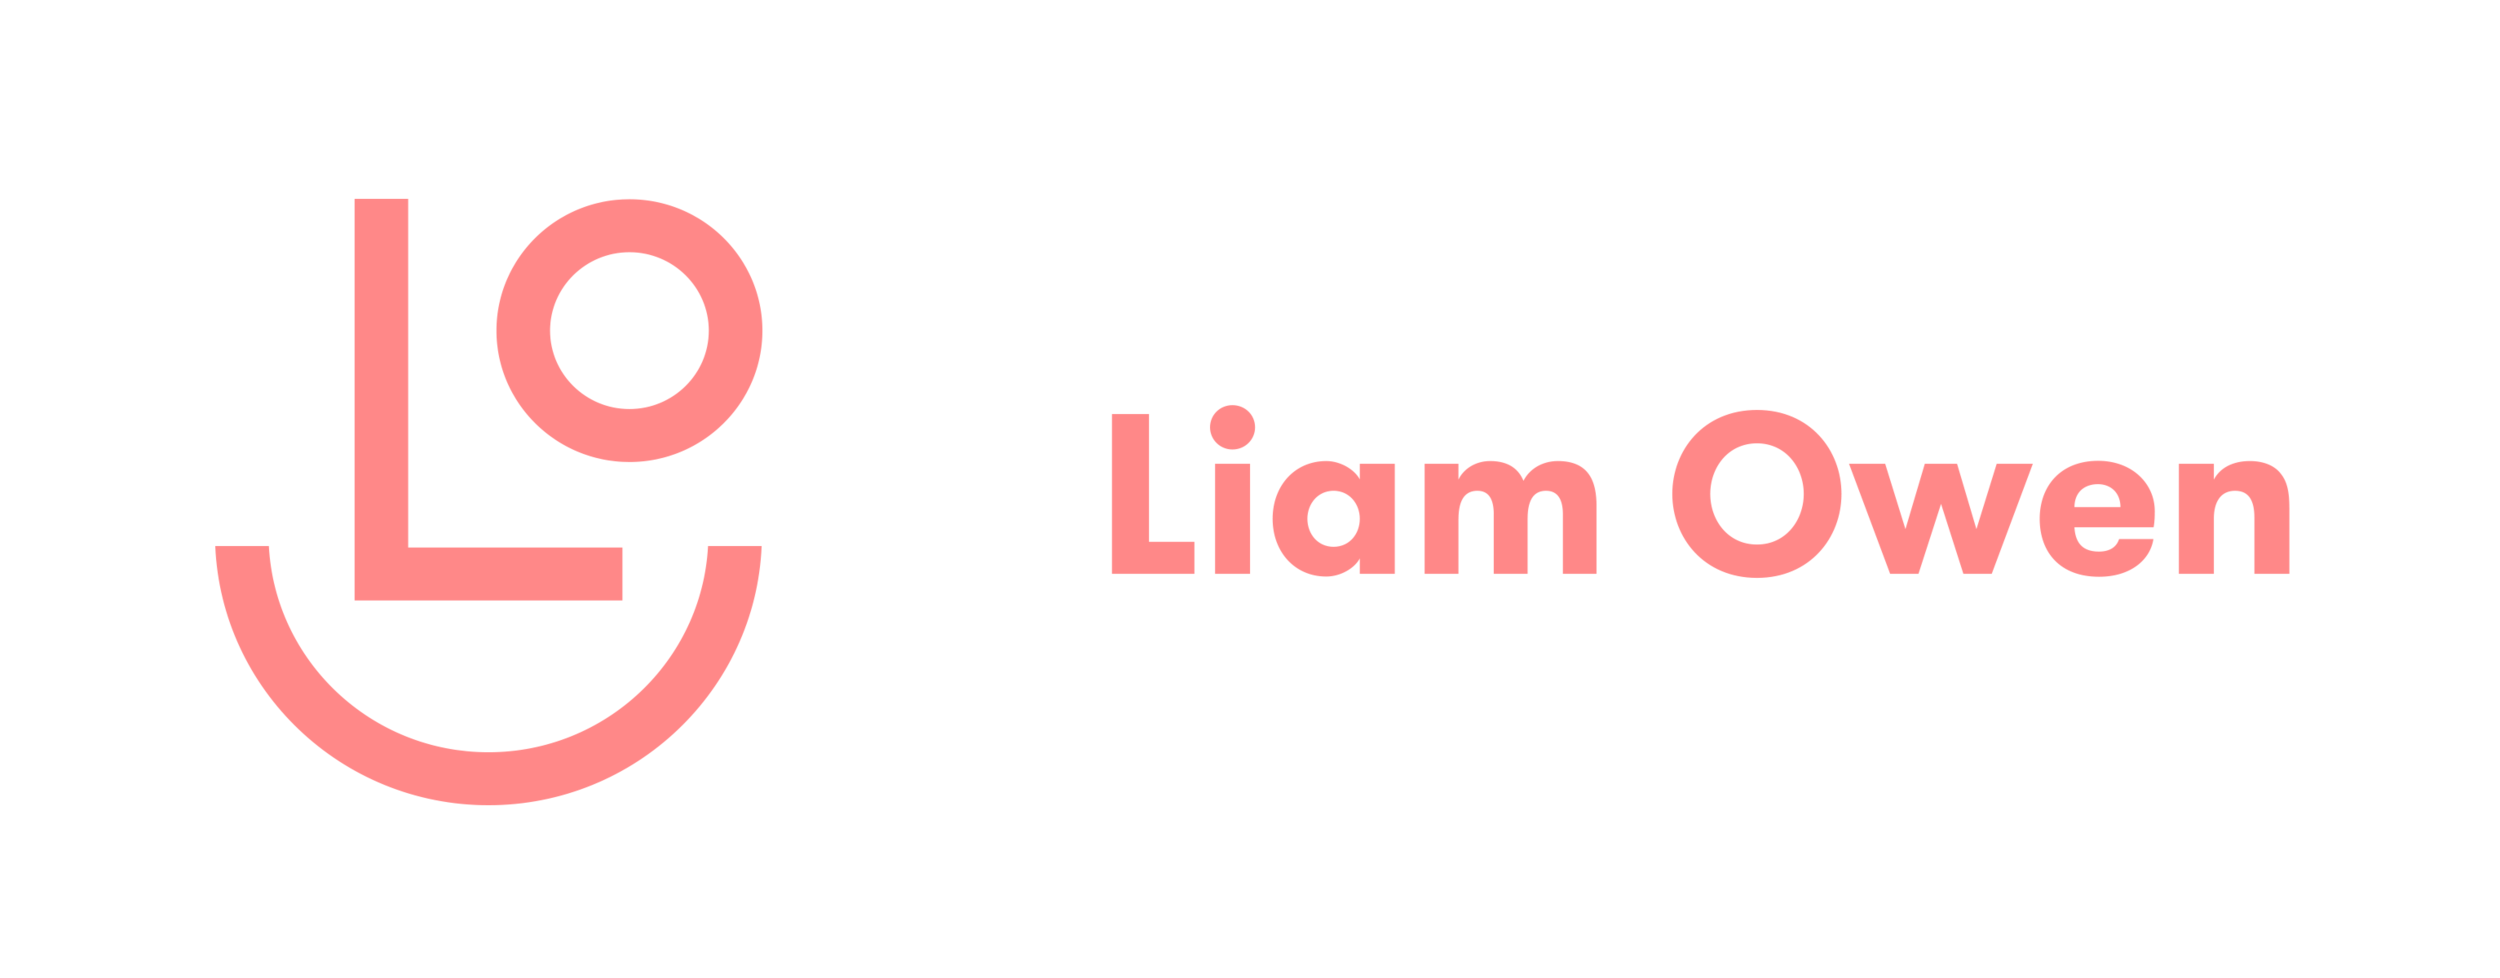 Liam Owen